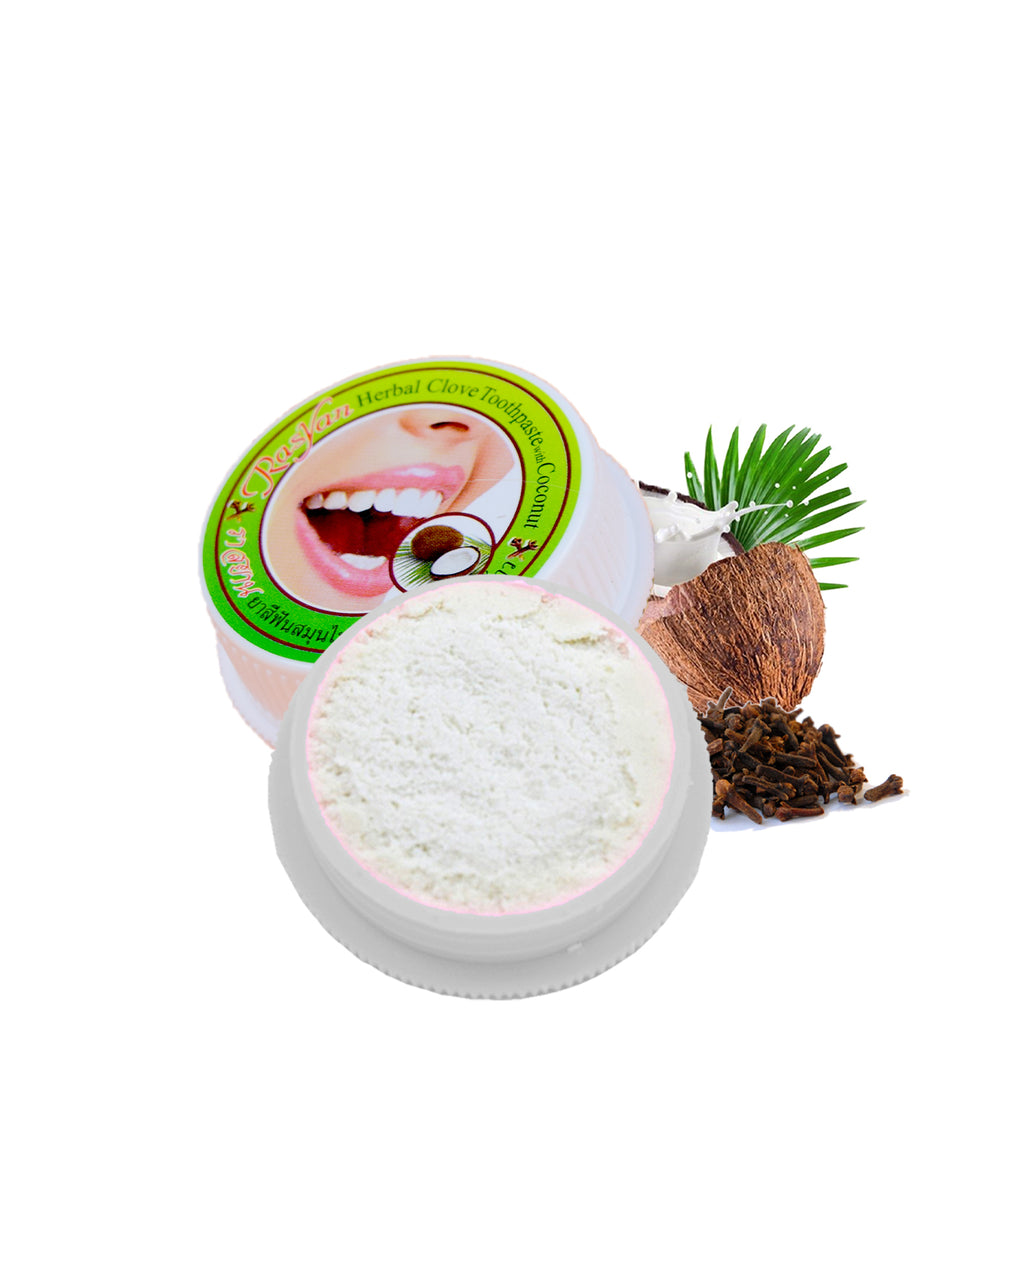 ISME Rasyan Herbal Clove Toothpaste with Coconut : อิสมี ราสยาน (ตลับ) ยาสีฟัน สมุนไพร กานพลู สูตรมะพร้าว